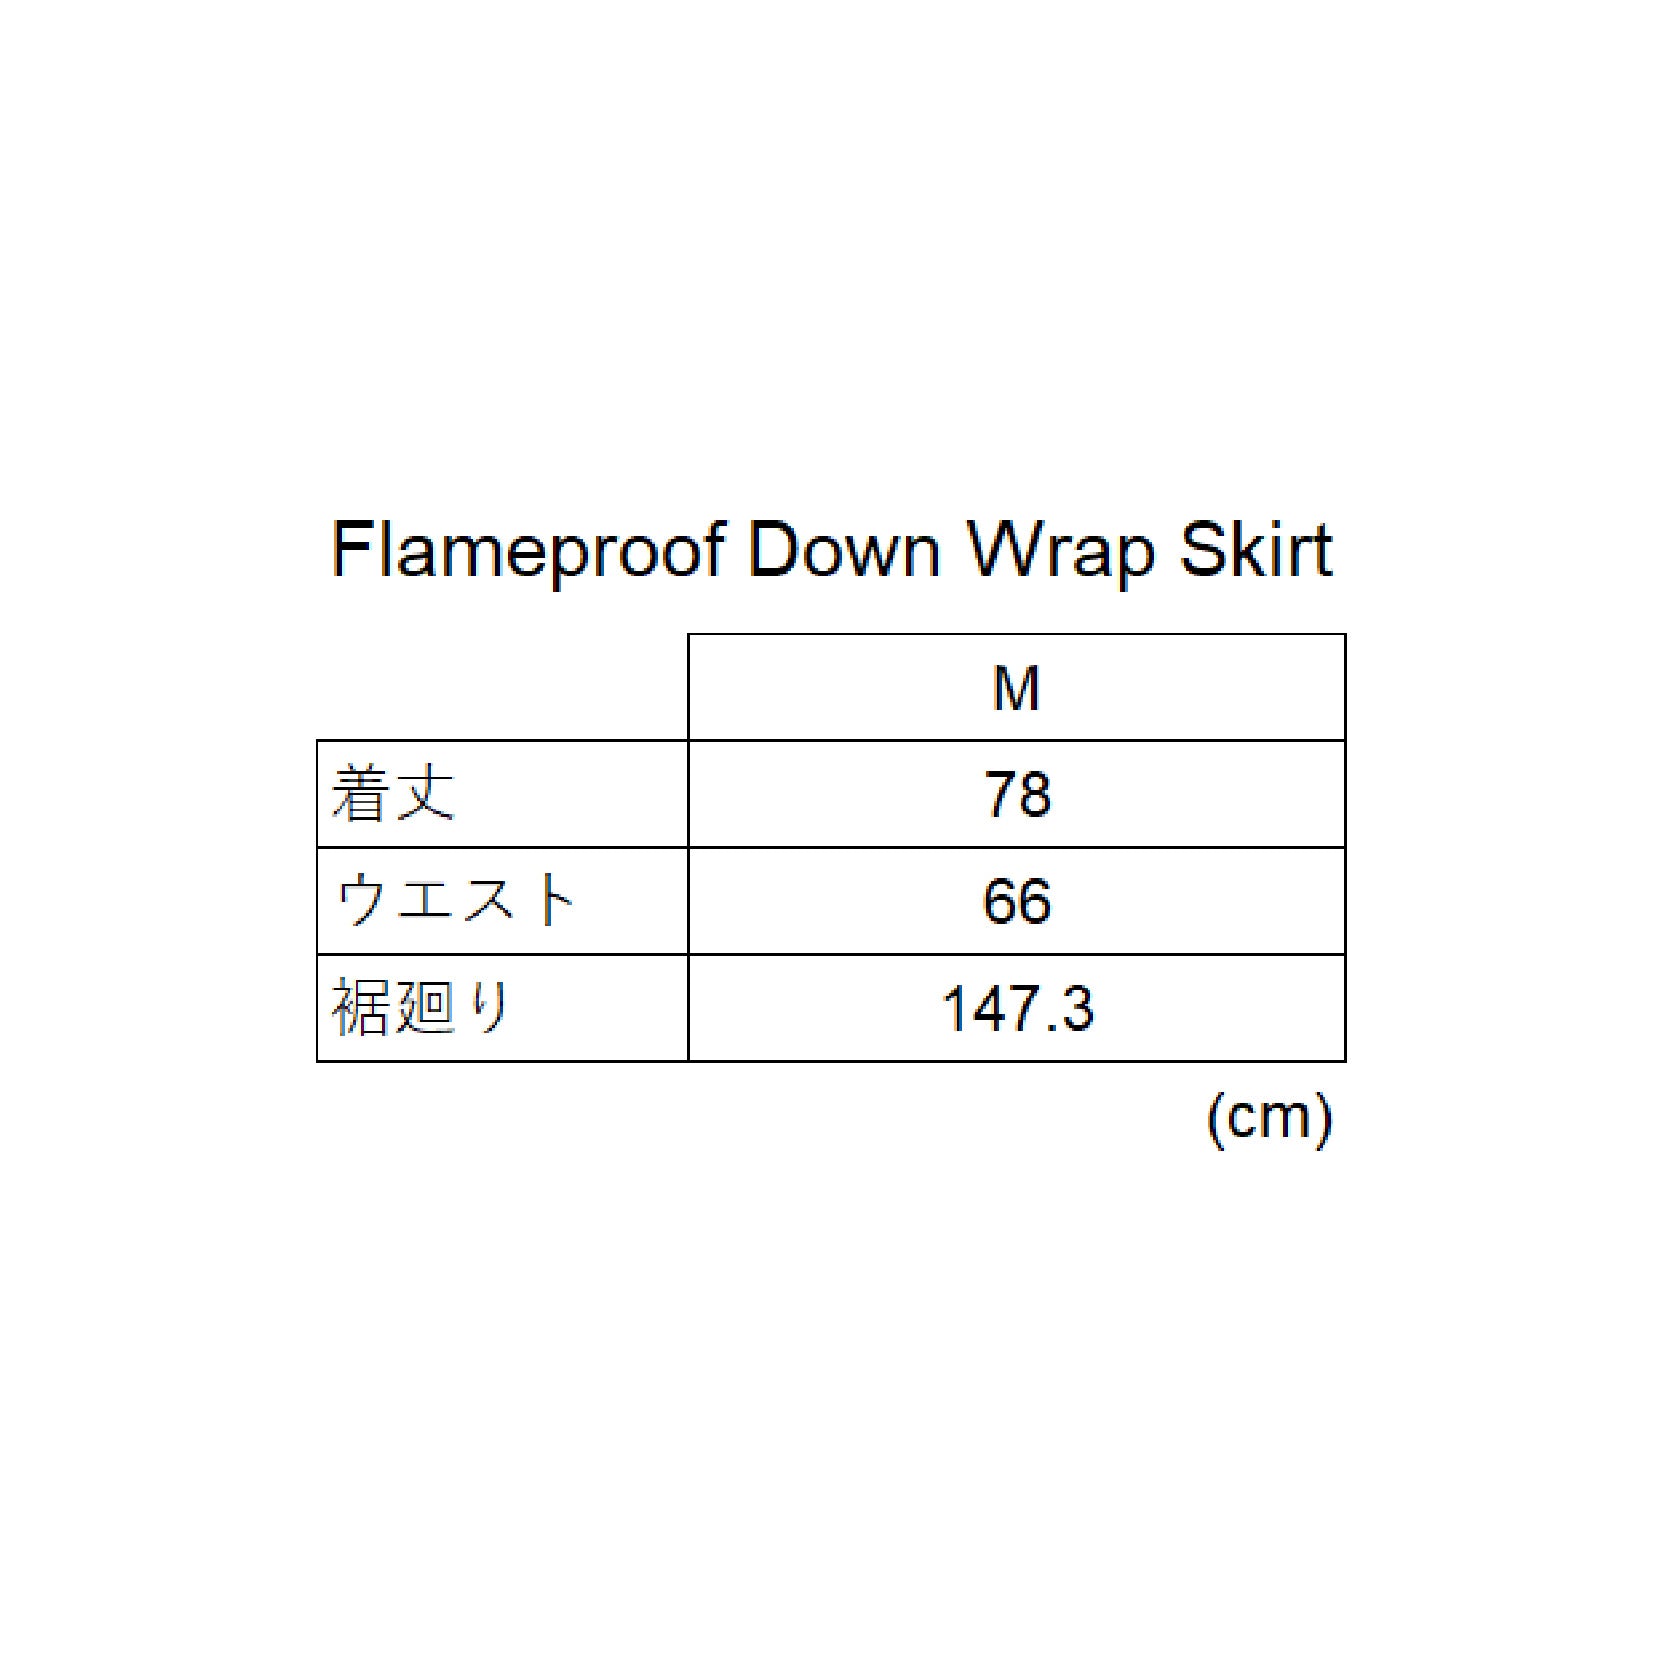 Flameproof Down Wrap Skirt